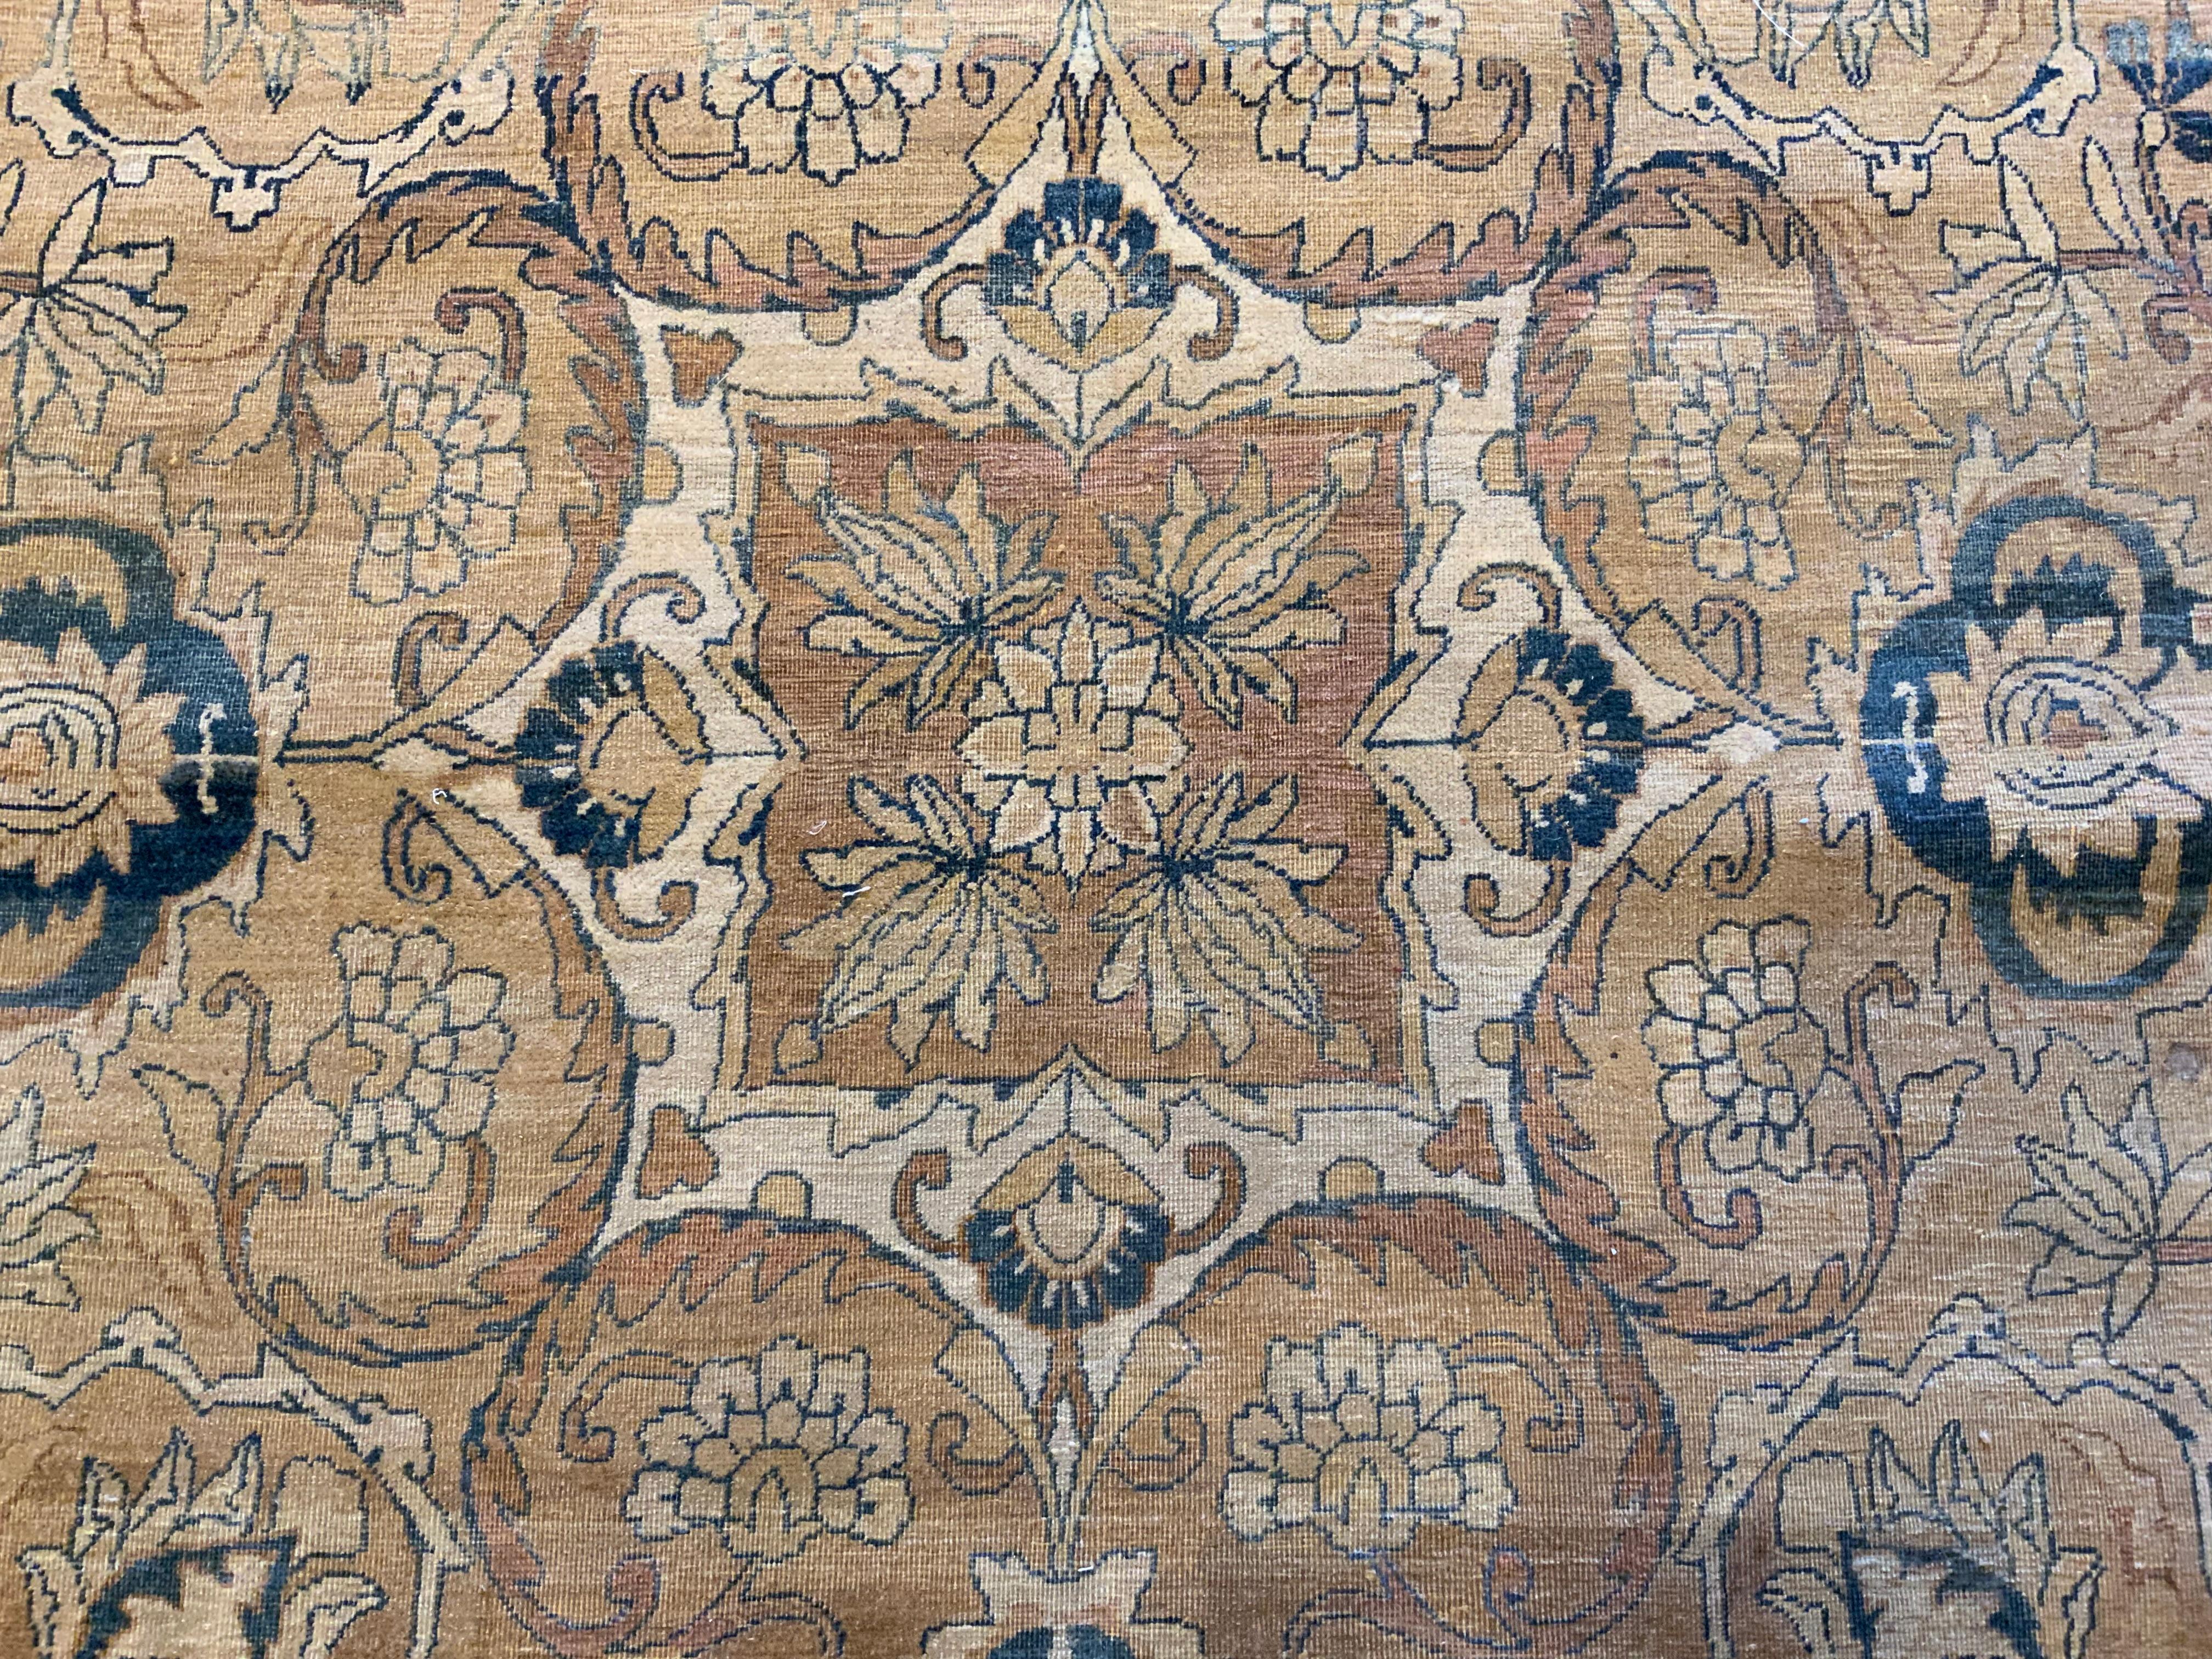 Antique Persian Kirman Botanic handmade wool rug
Size: 12'5